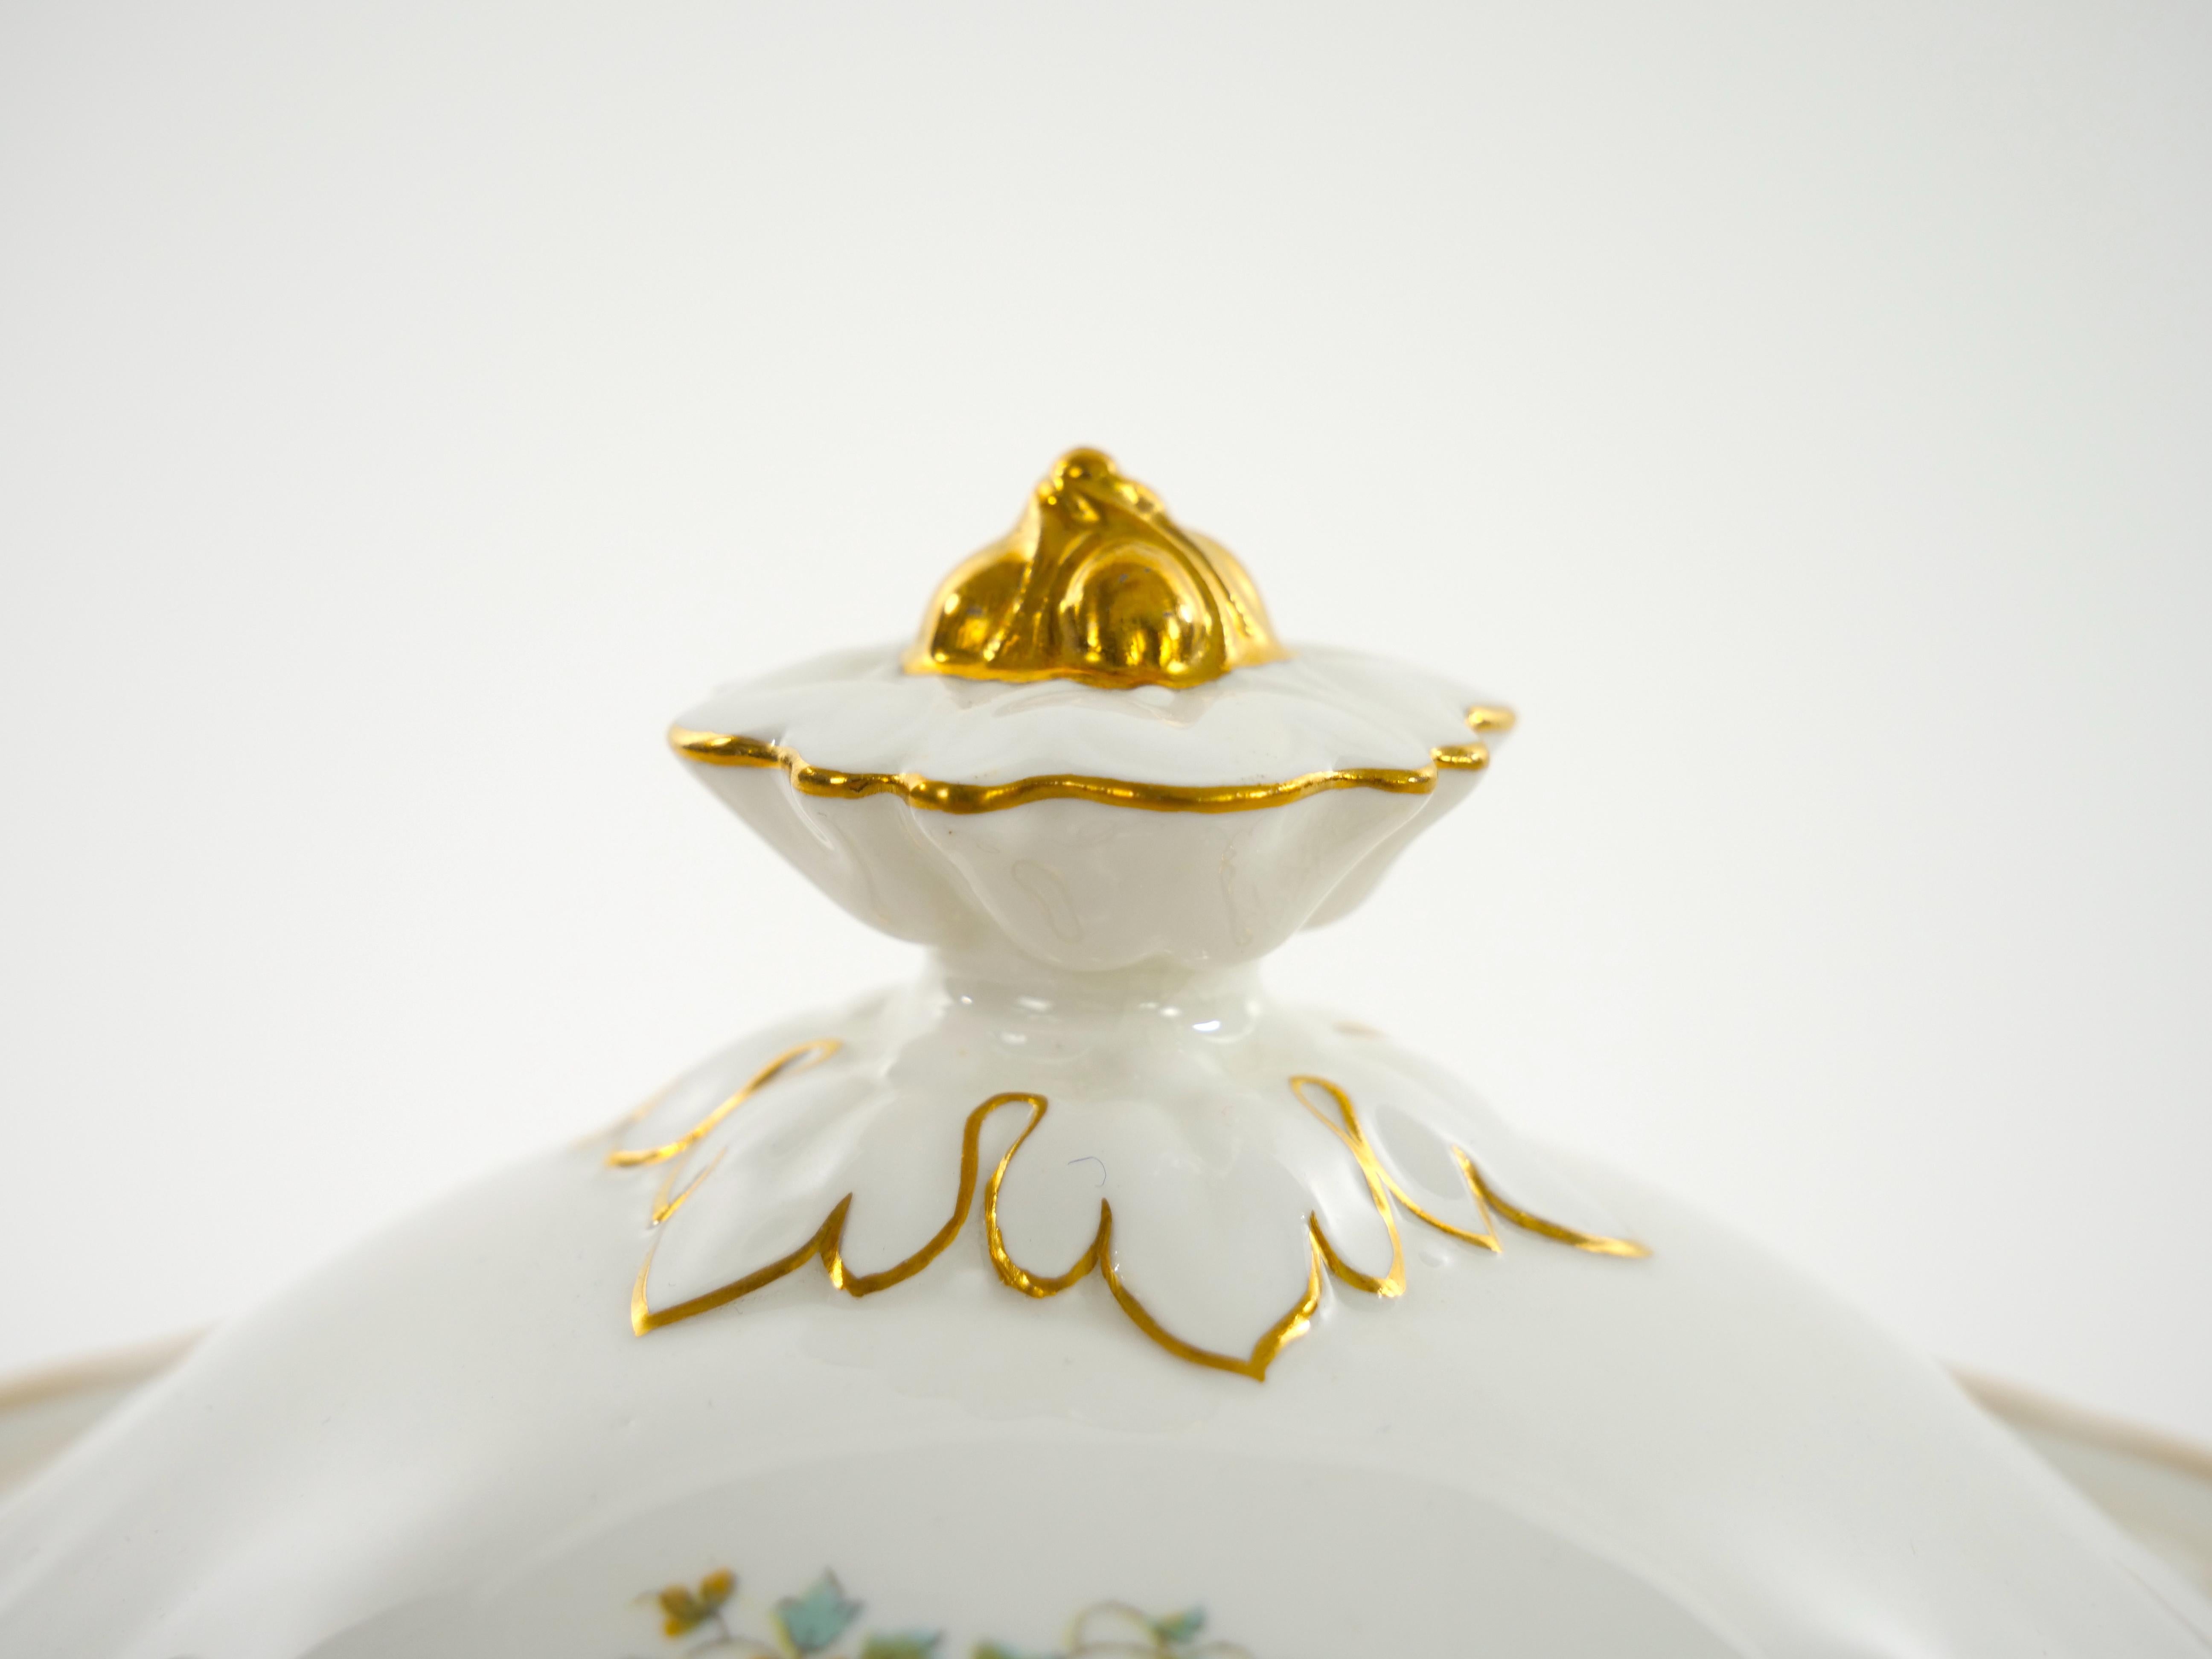 English Royal Crown Derby Porcelain Dinner Service / 16 People For Sale 10